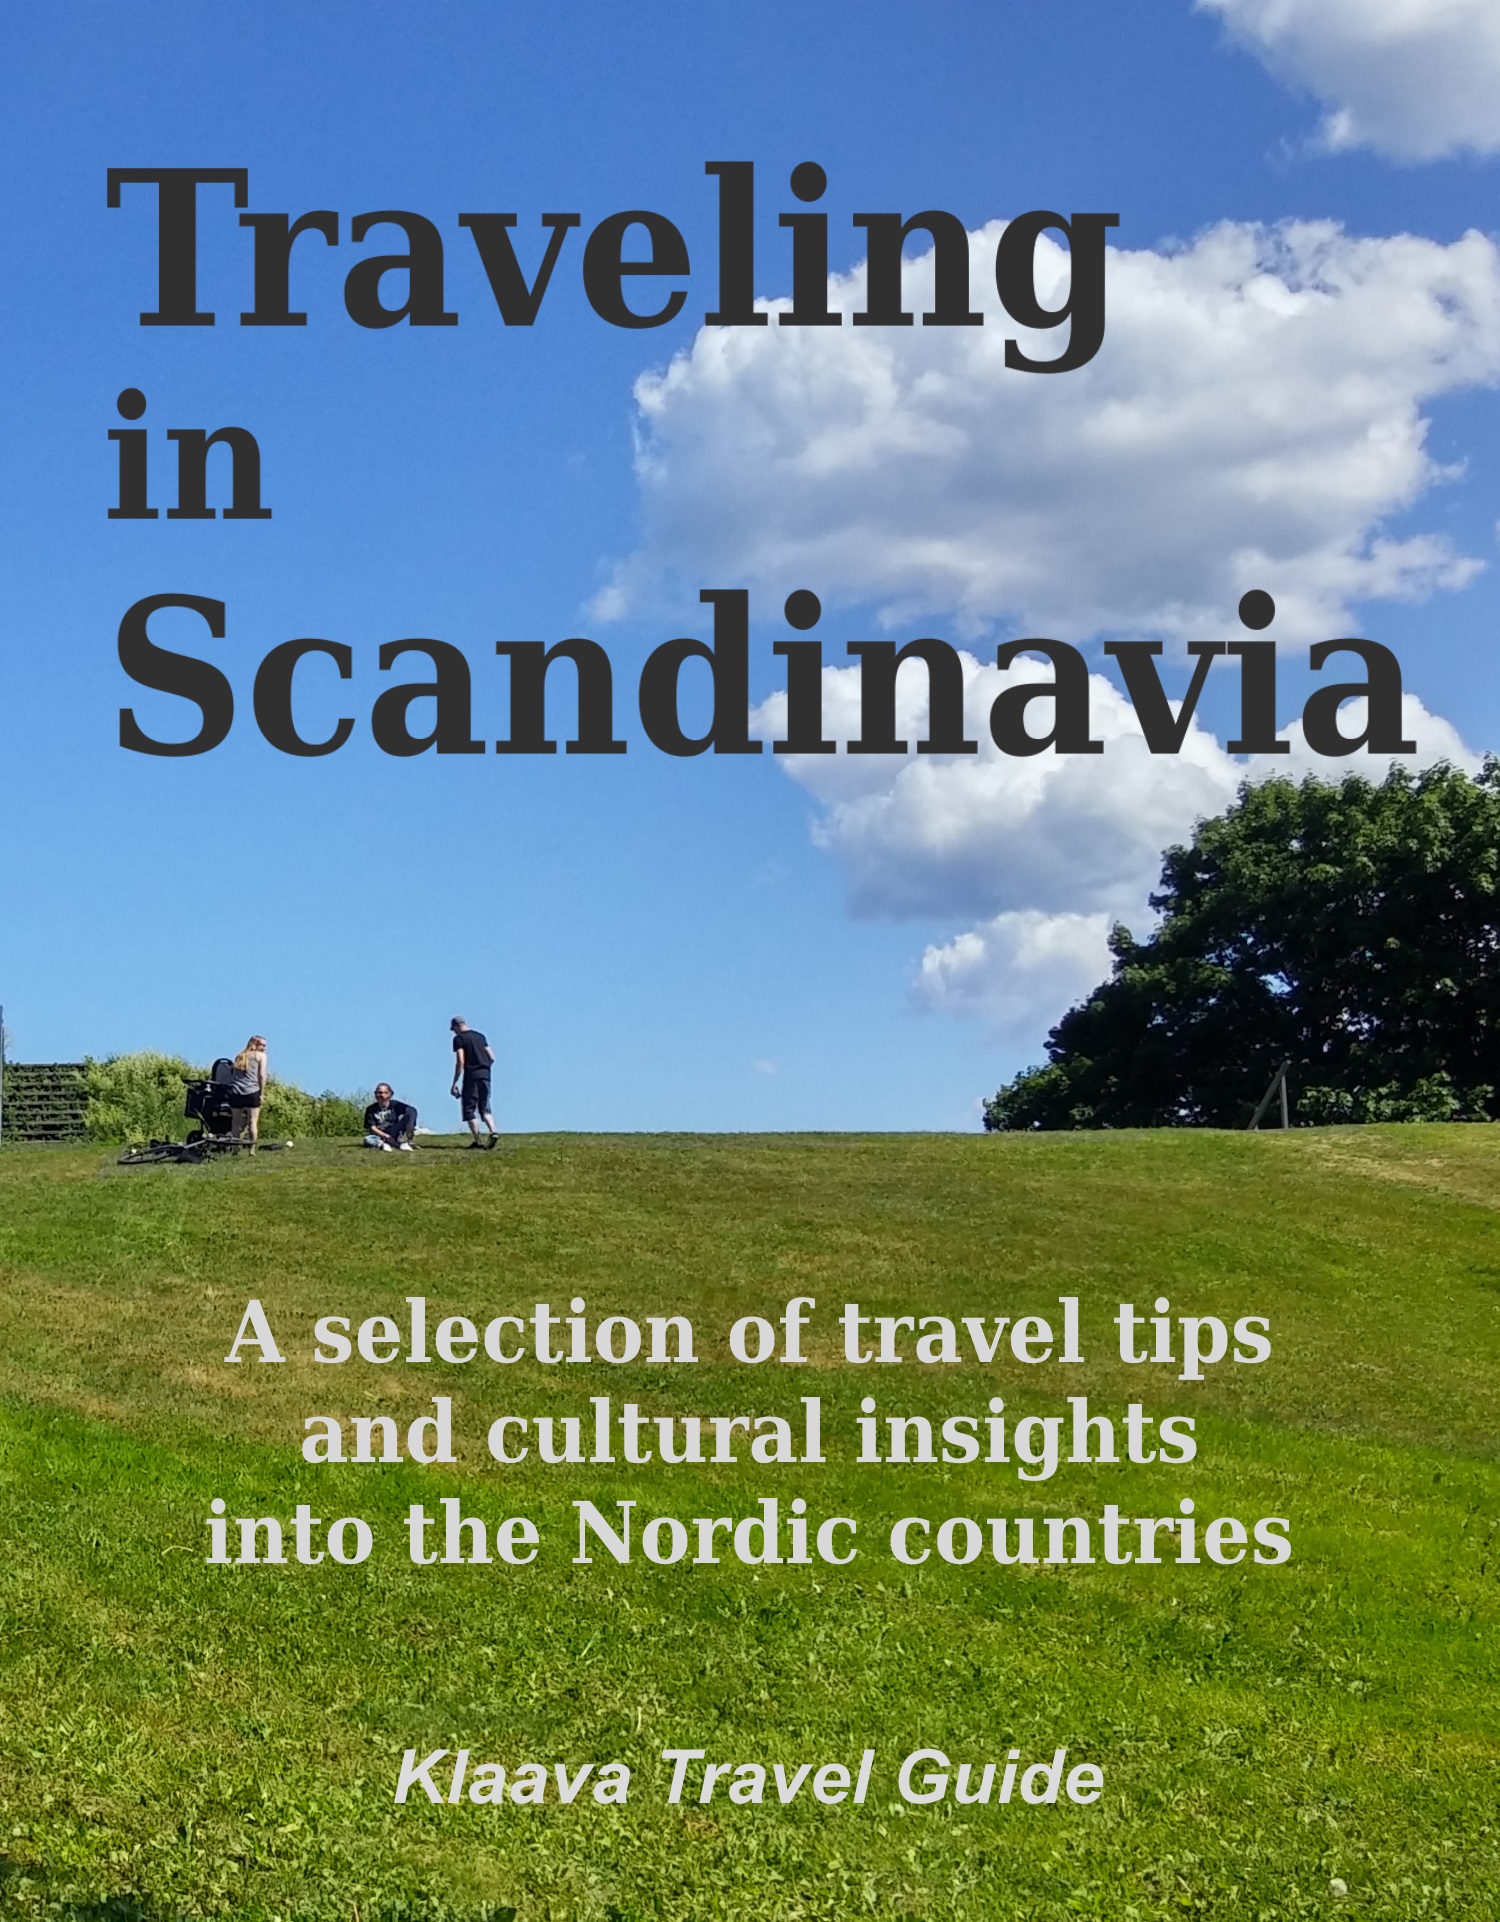 travel books on scandinavia